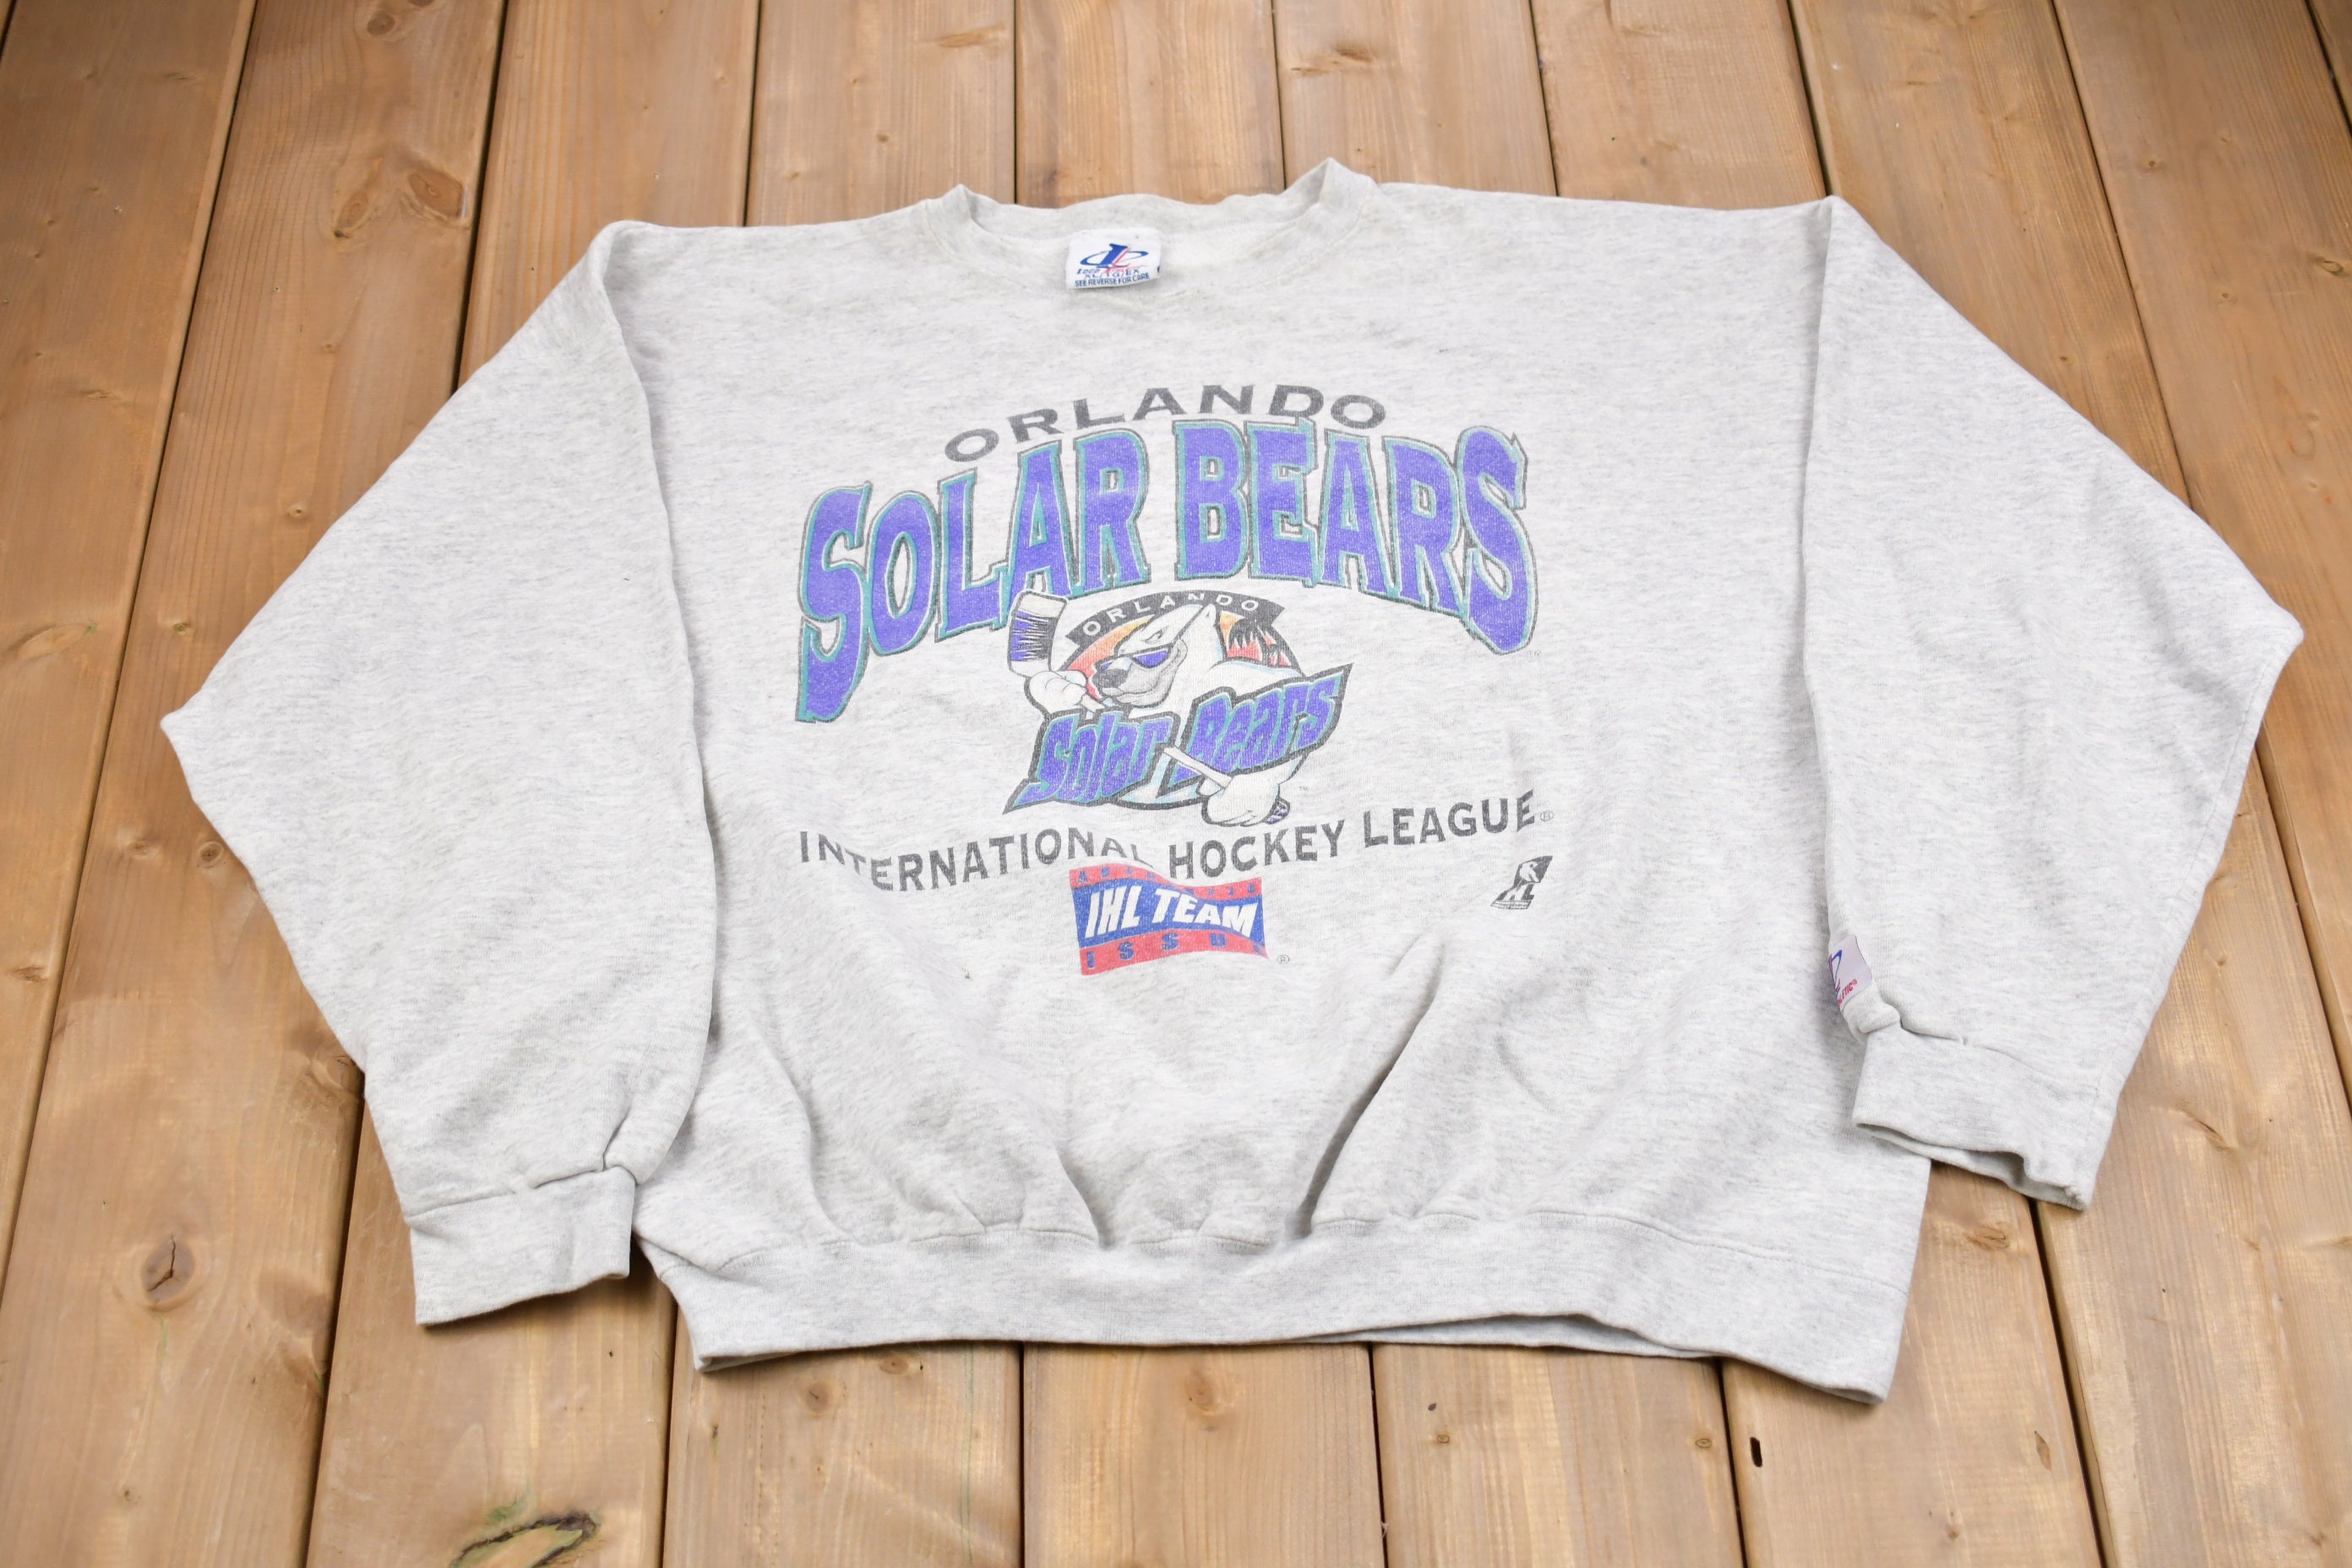 Orlando Solar Bears Minor League Hockey Fan Apparel and Souvenirs for sale